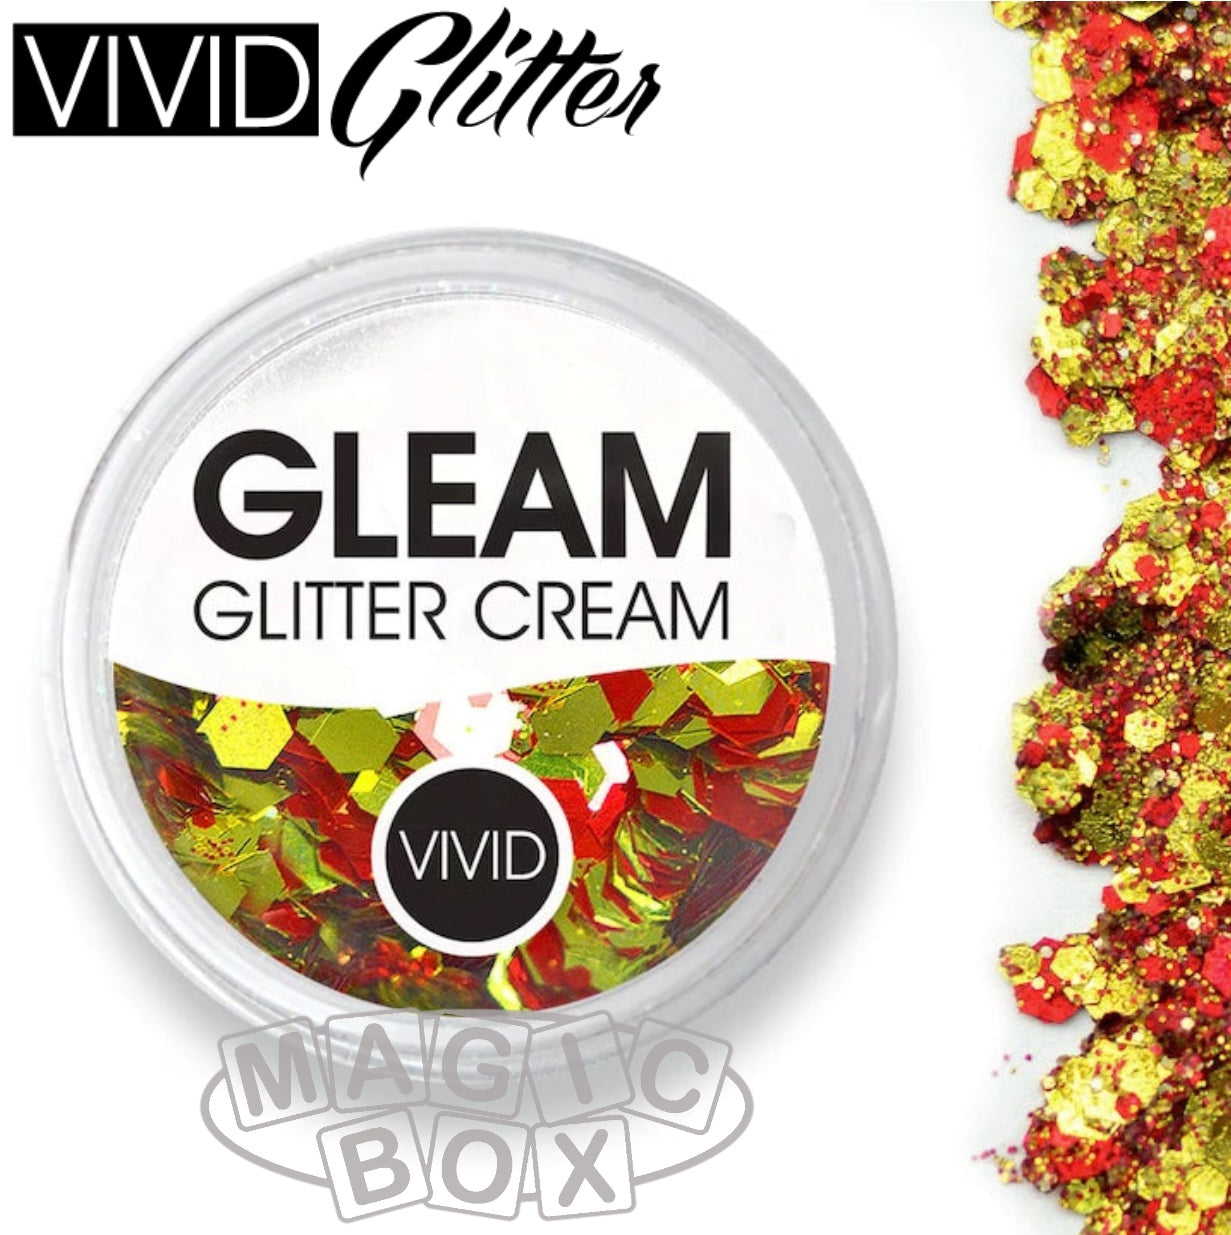 Vivid, Gleam Glitter Cream 10g, Victorious